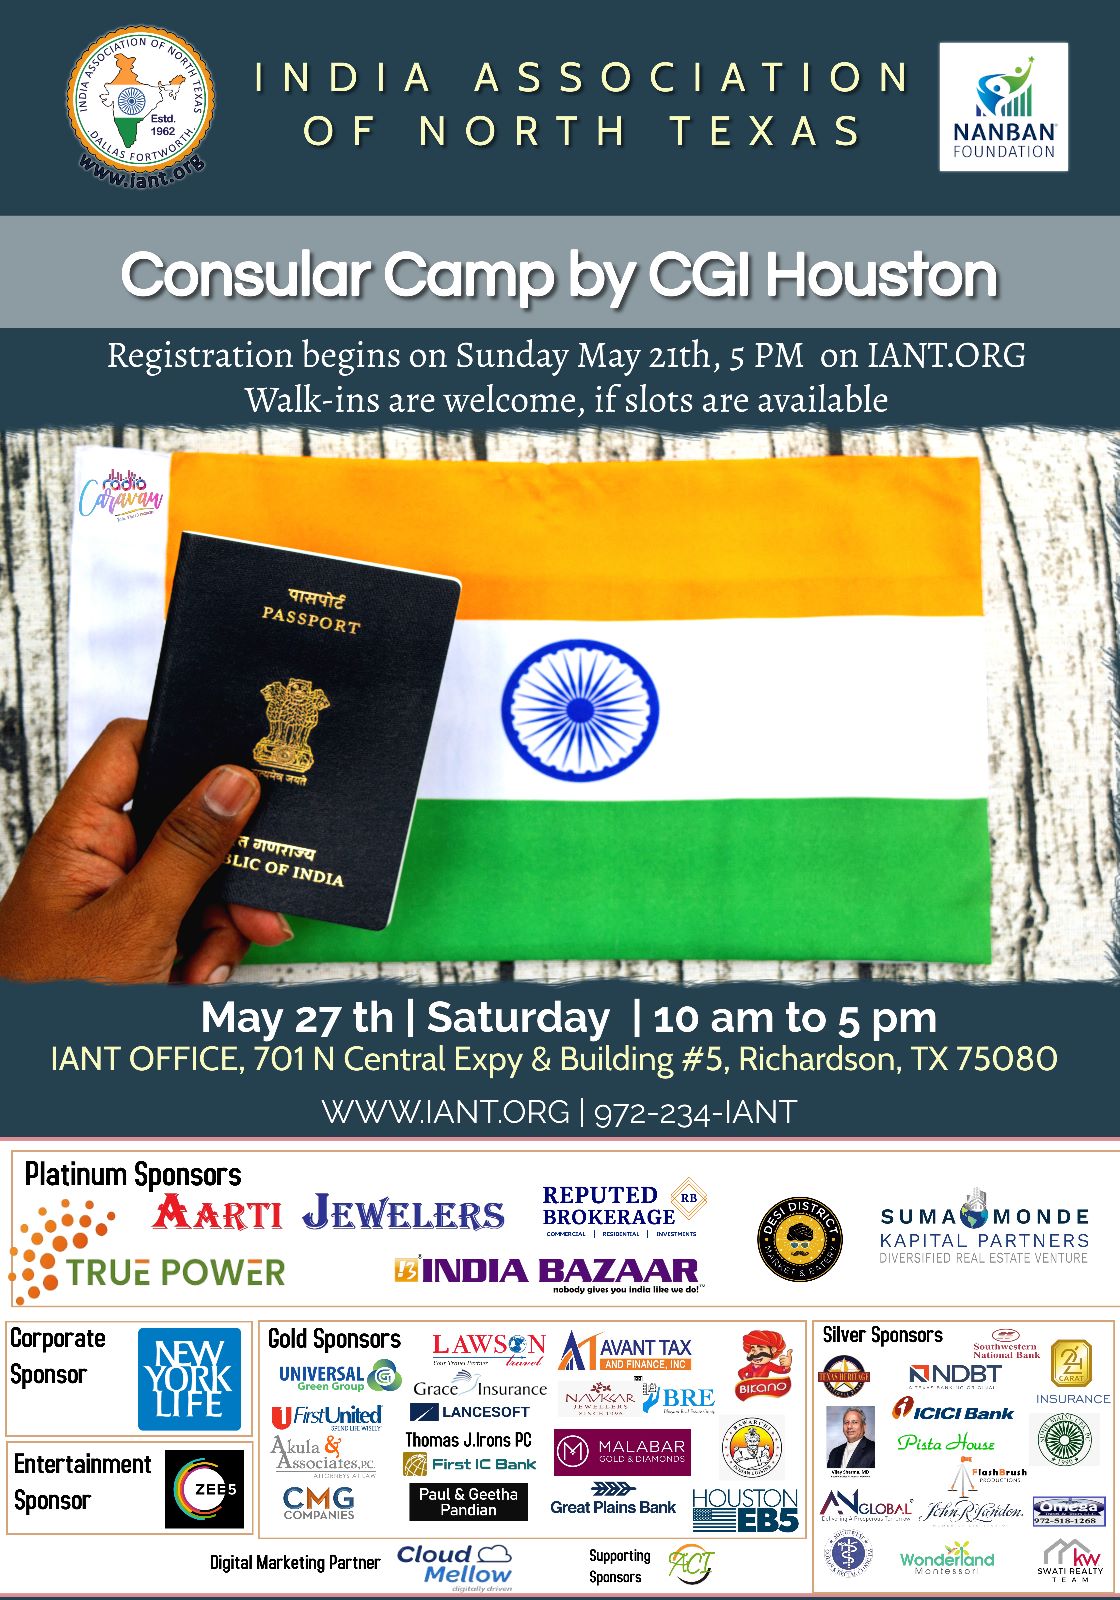 Consular Camp by CGI Houston IANT India Association of North Texas